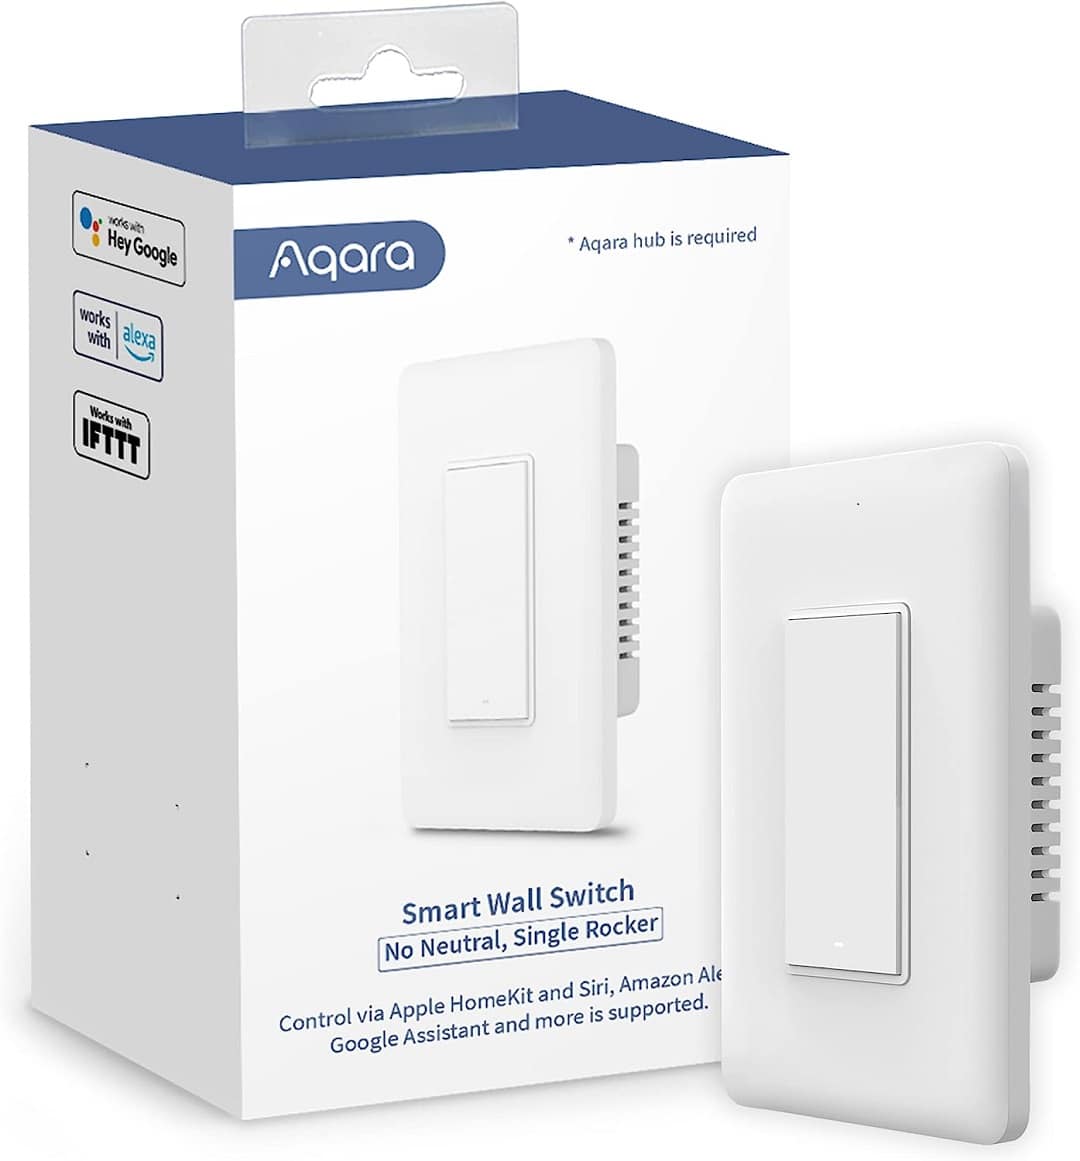 Aqara's smart light switch ( single rocker, no neutral model ) next to it's packaging.